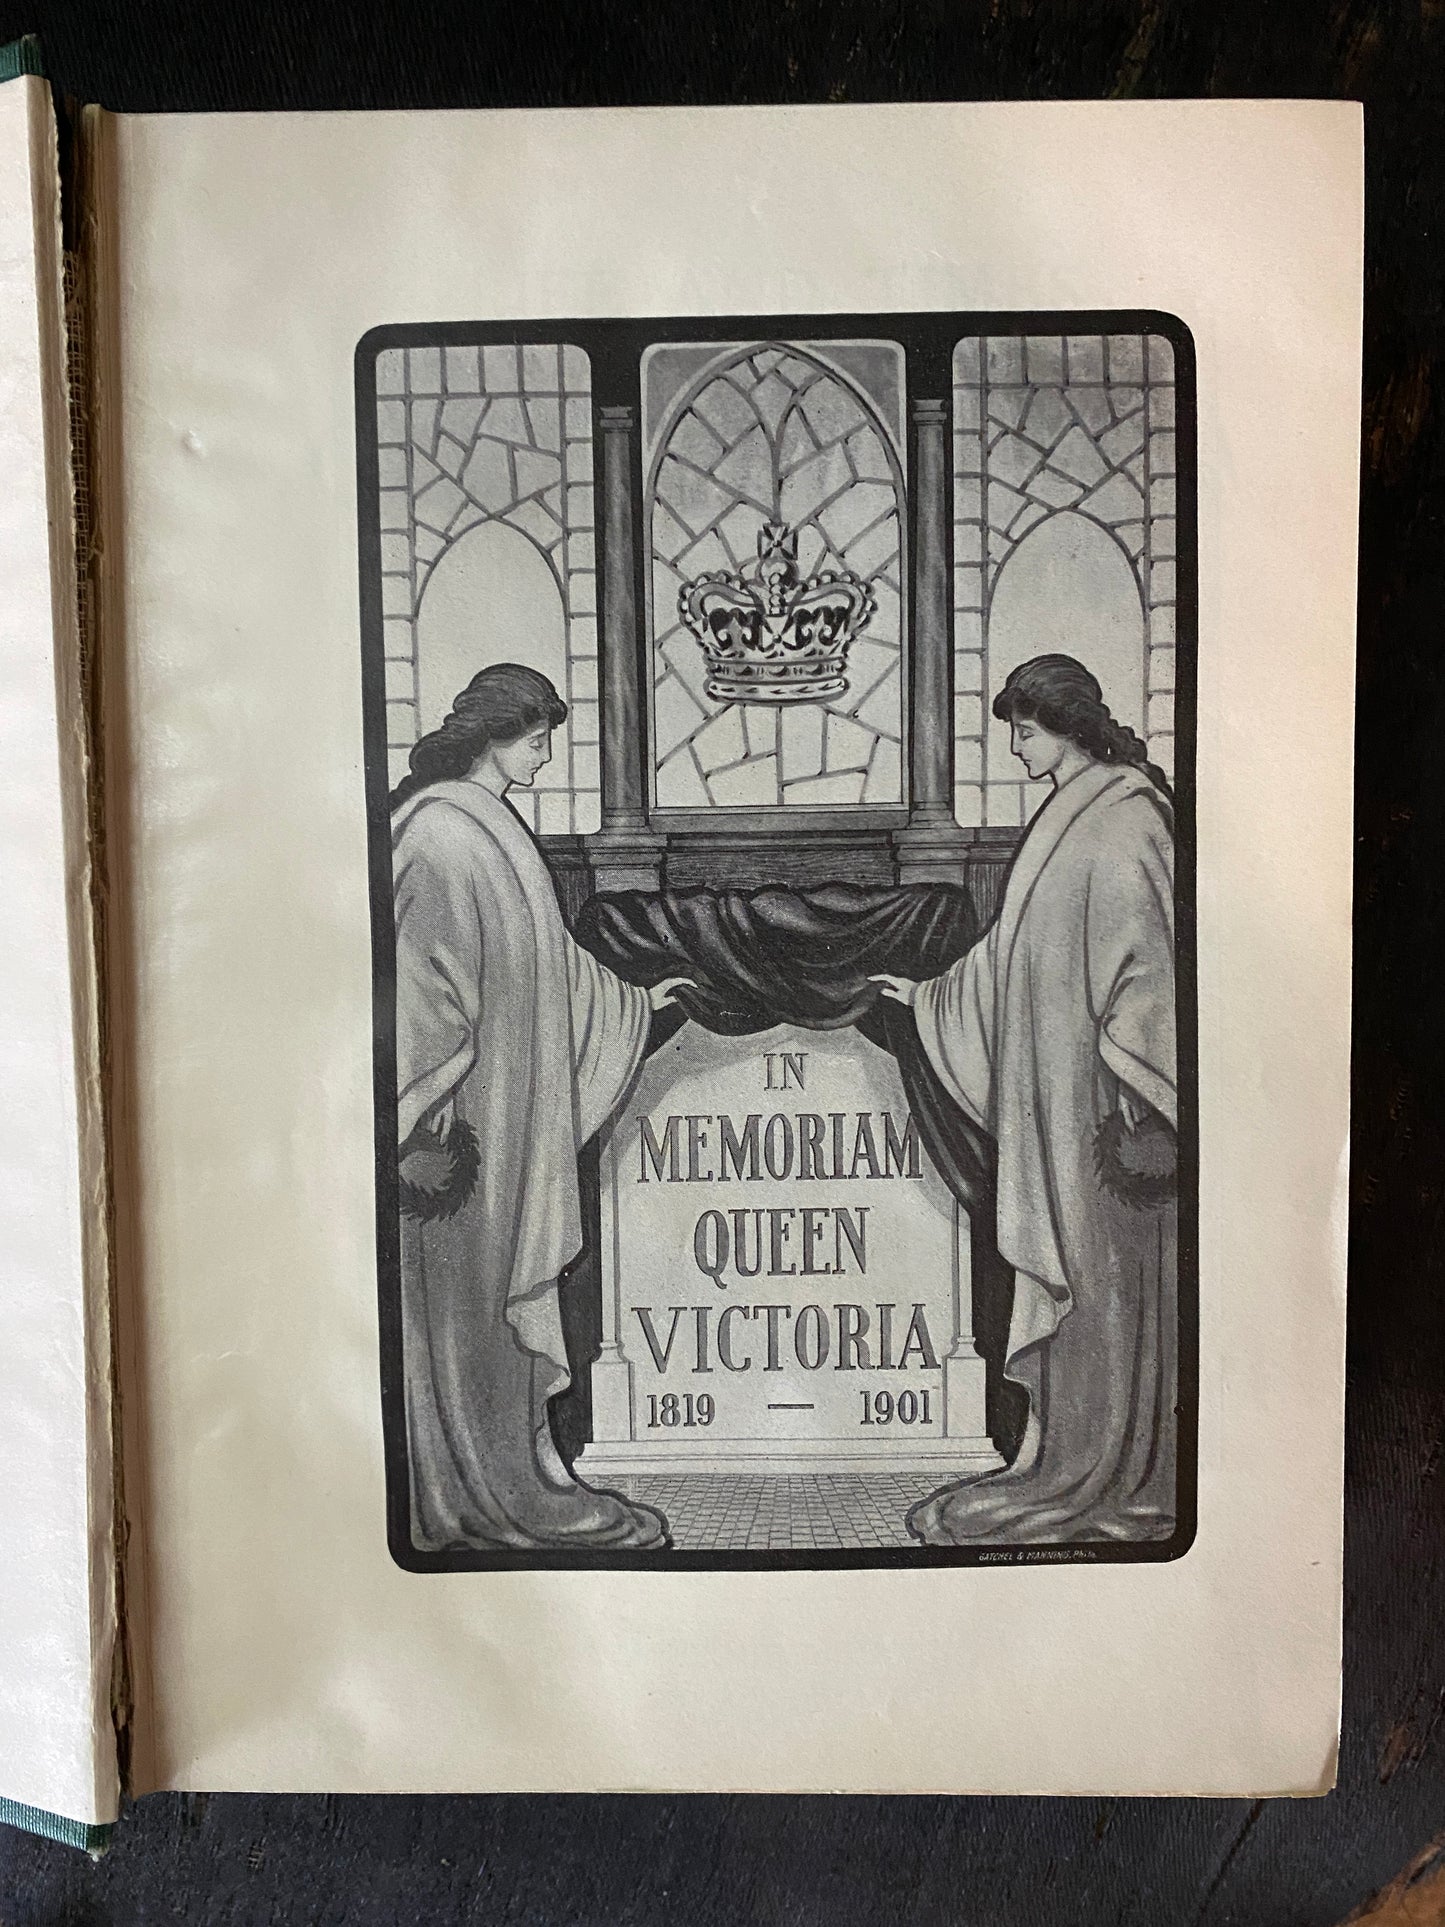 The Life of Queen Victoria, Memorial Edition